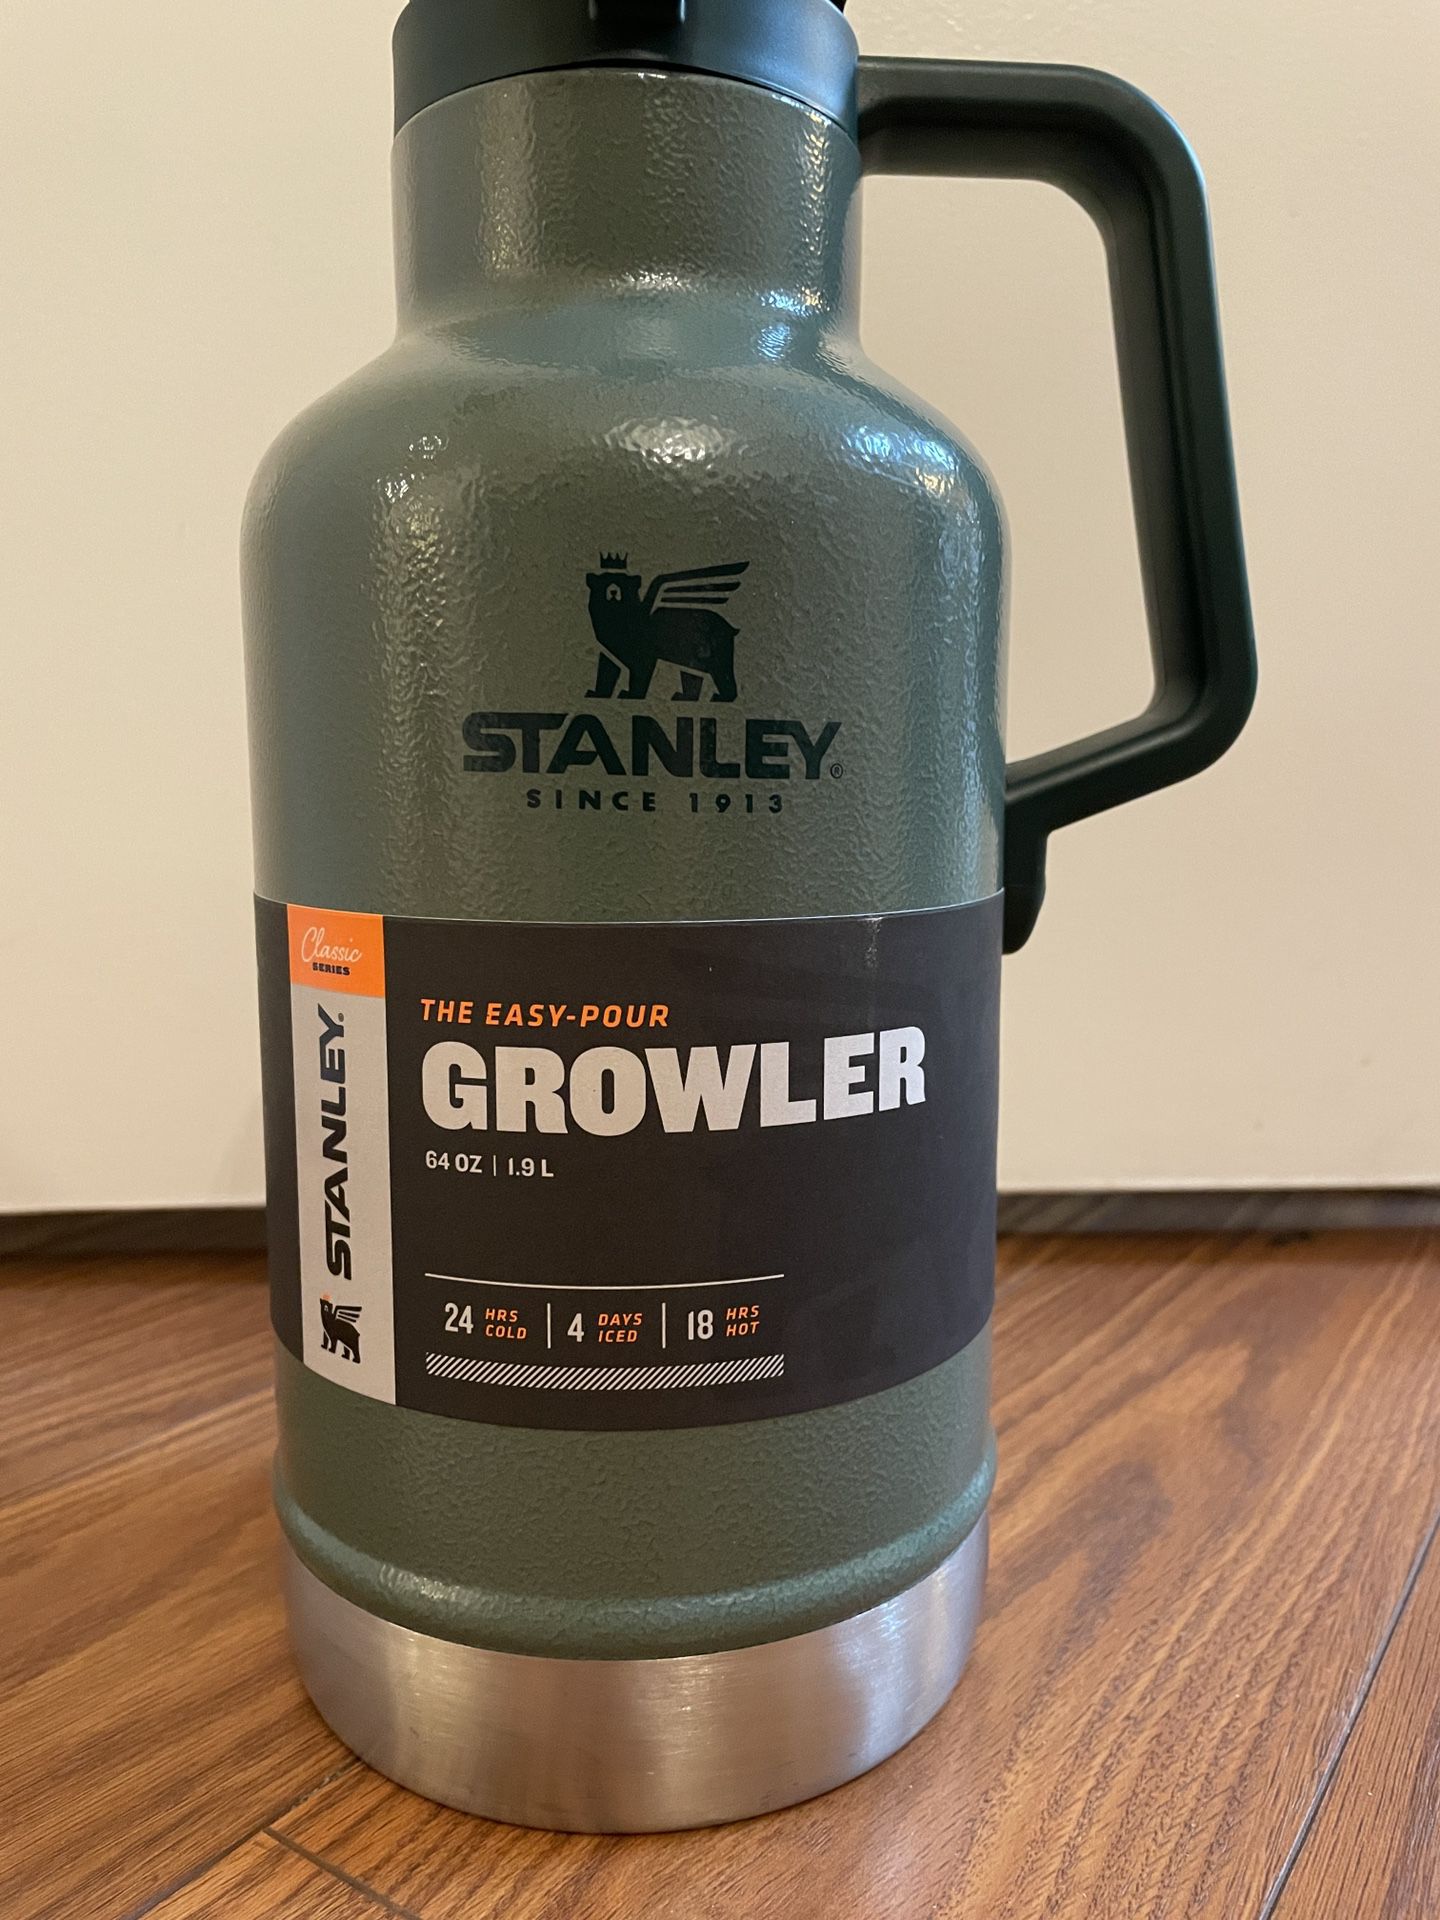 64 Oz. Stanley growler for Sale in Bozeman, MT - OfferUp